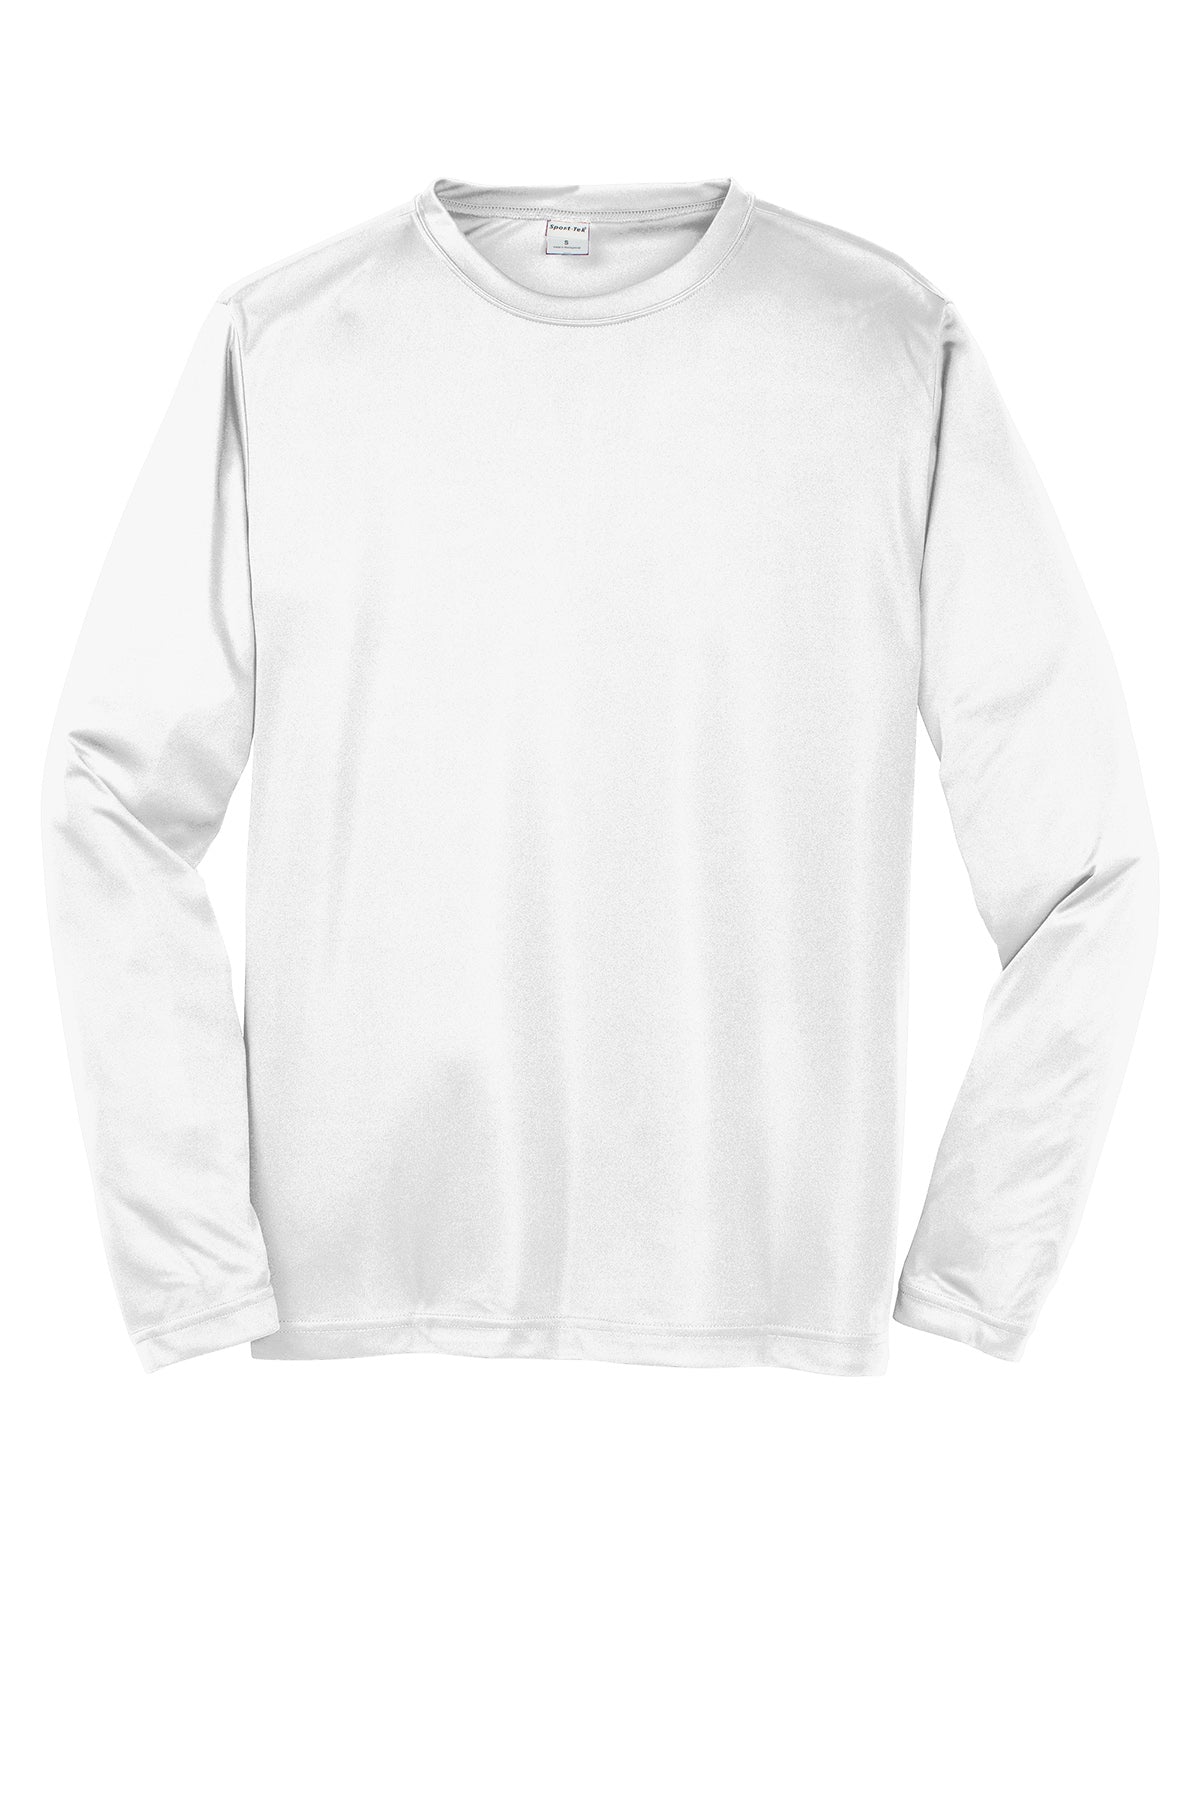 Sport-Tek St350Ls Polyester Adult Long Sleeve T-Shirt Ad Small / White